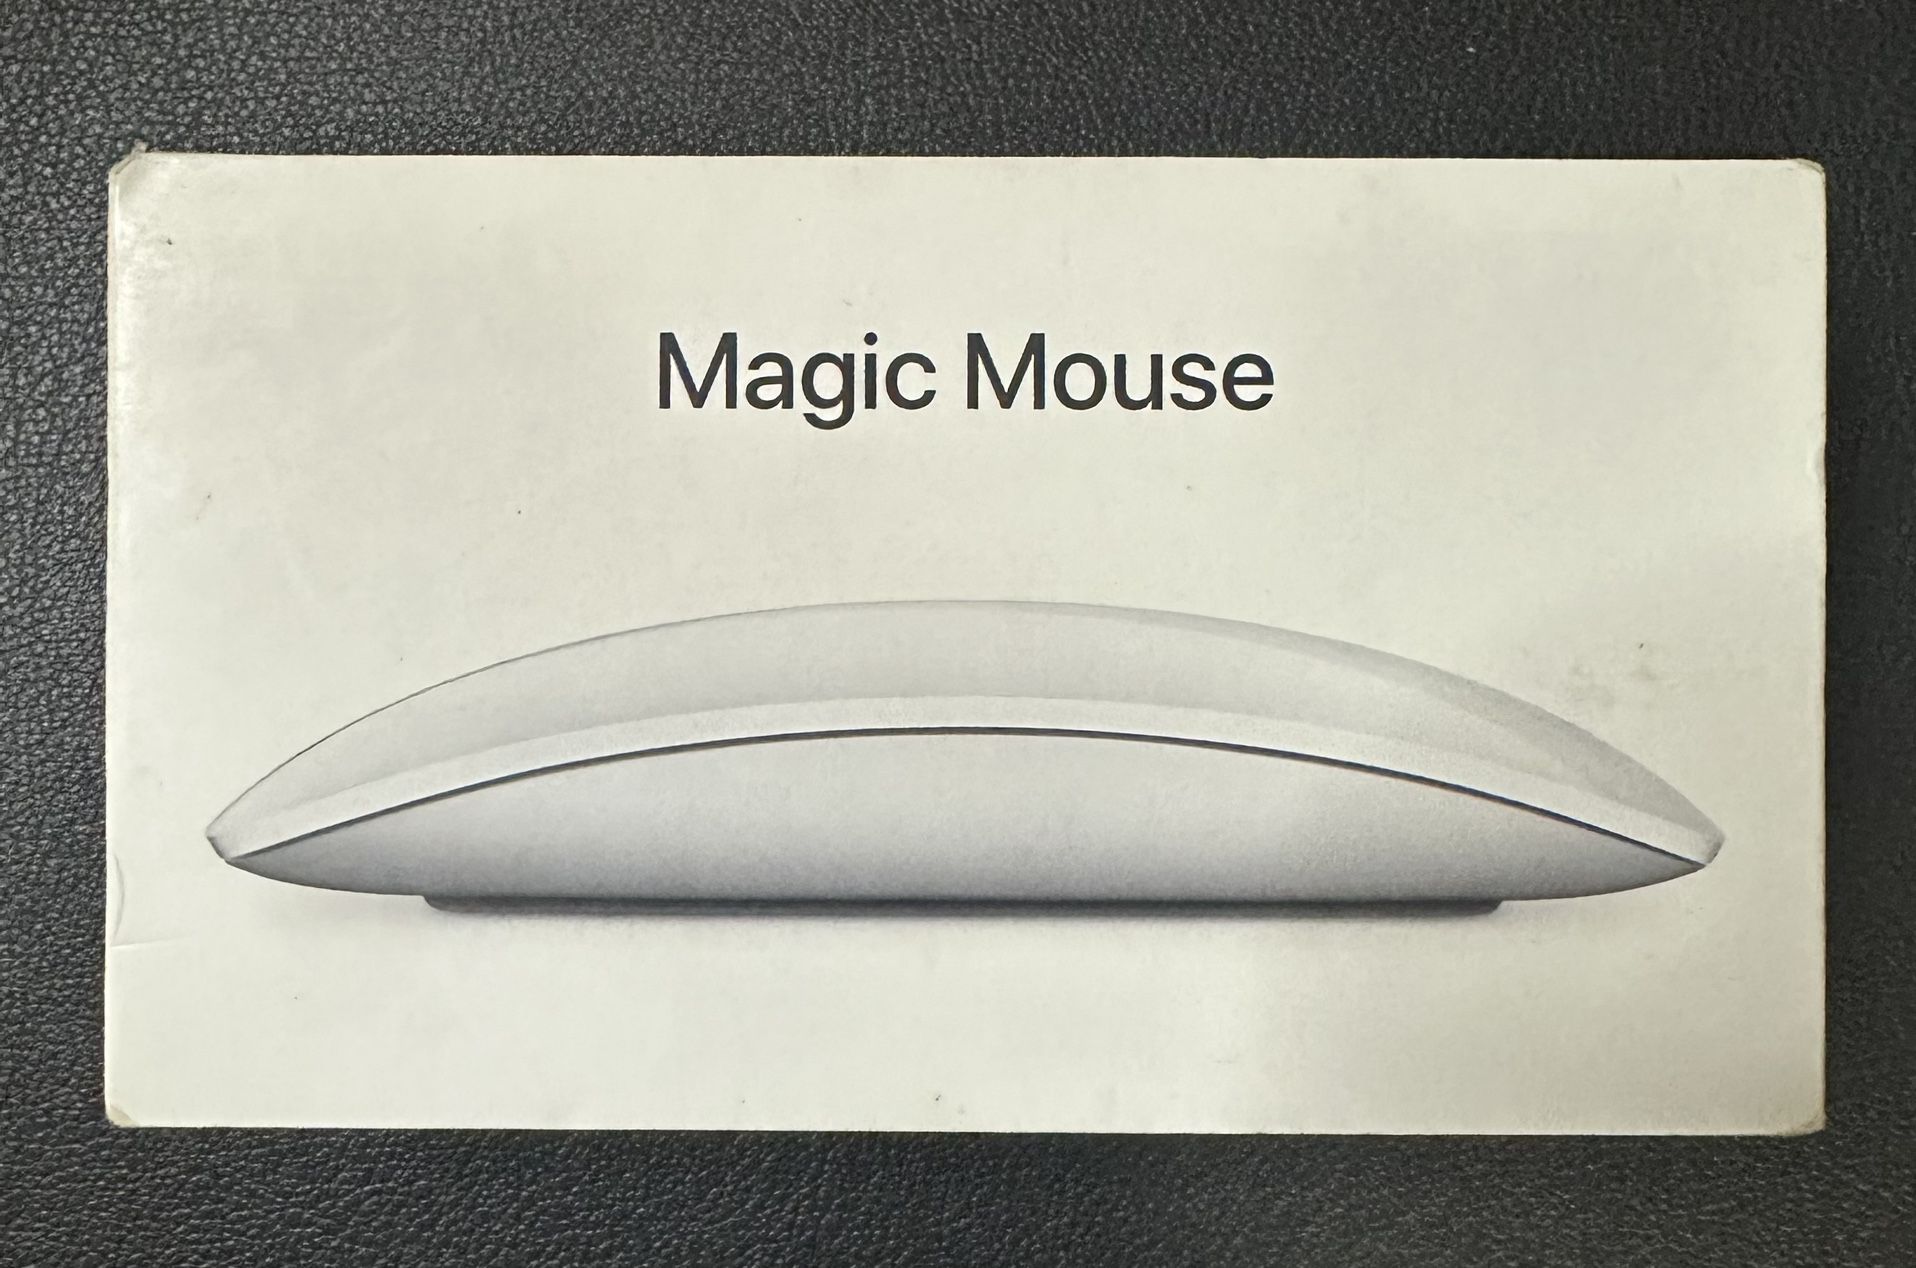 Apple Magic Mouse 2 (wireless)